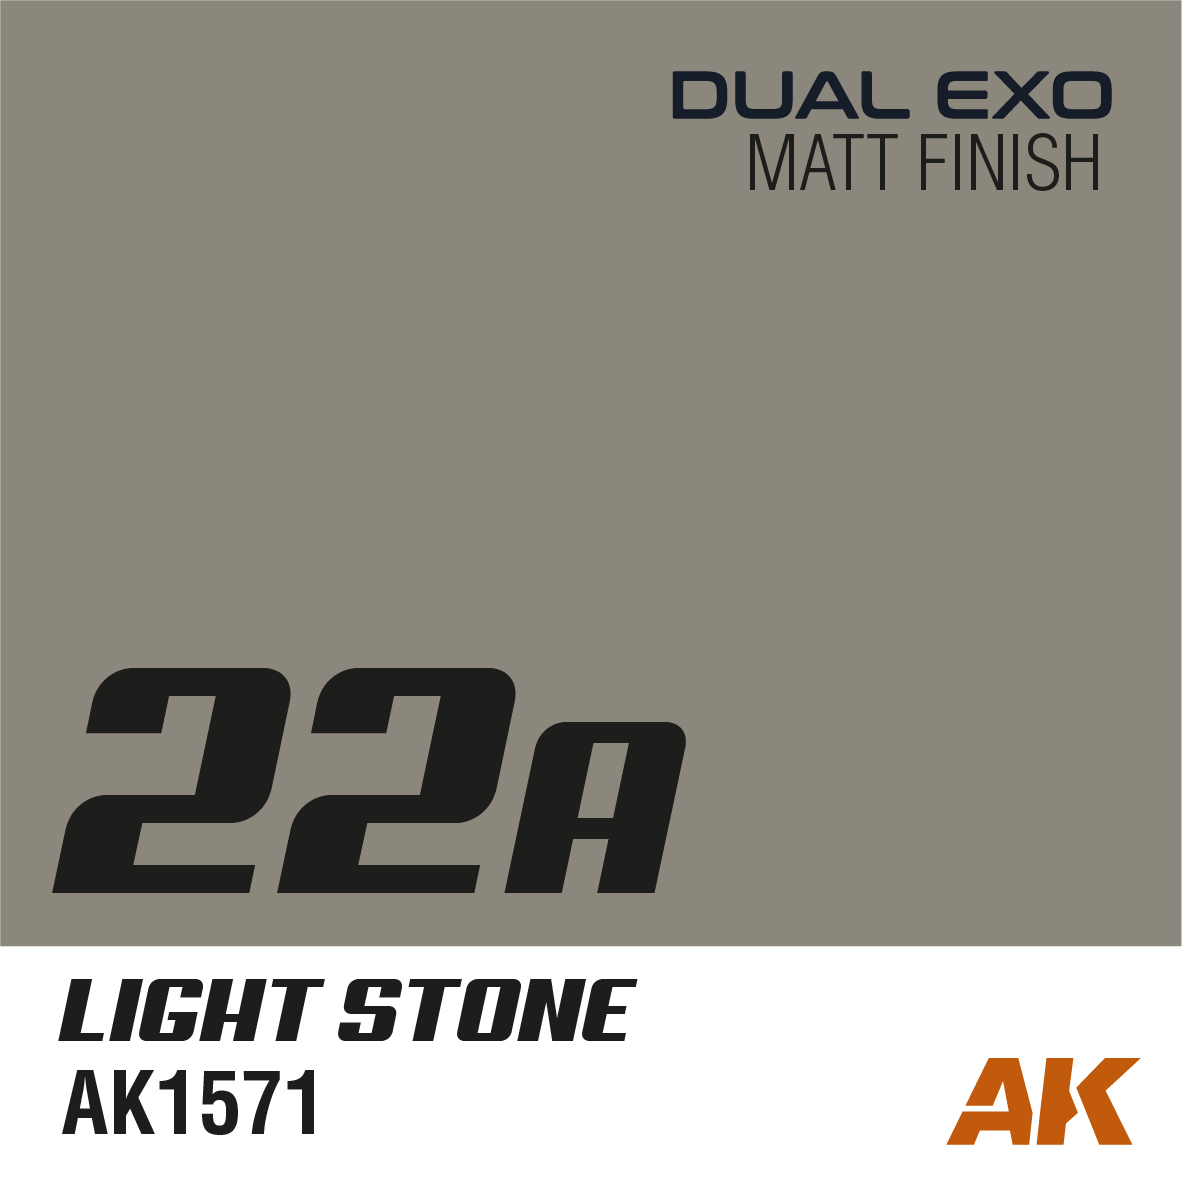 Dual Exo Scenery 22A - Light Stone